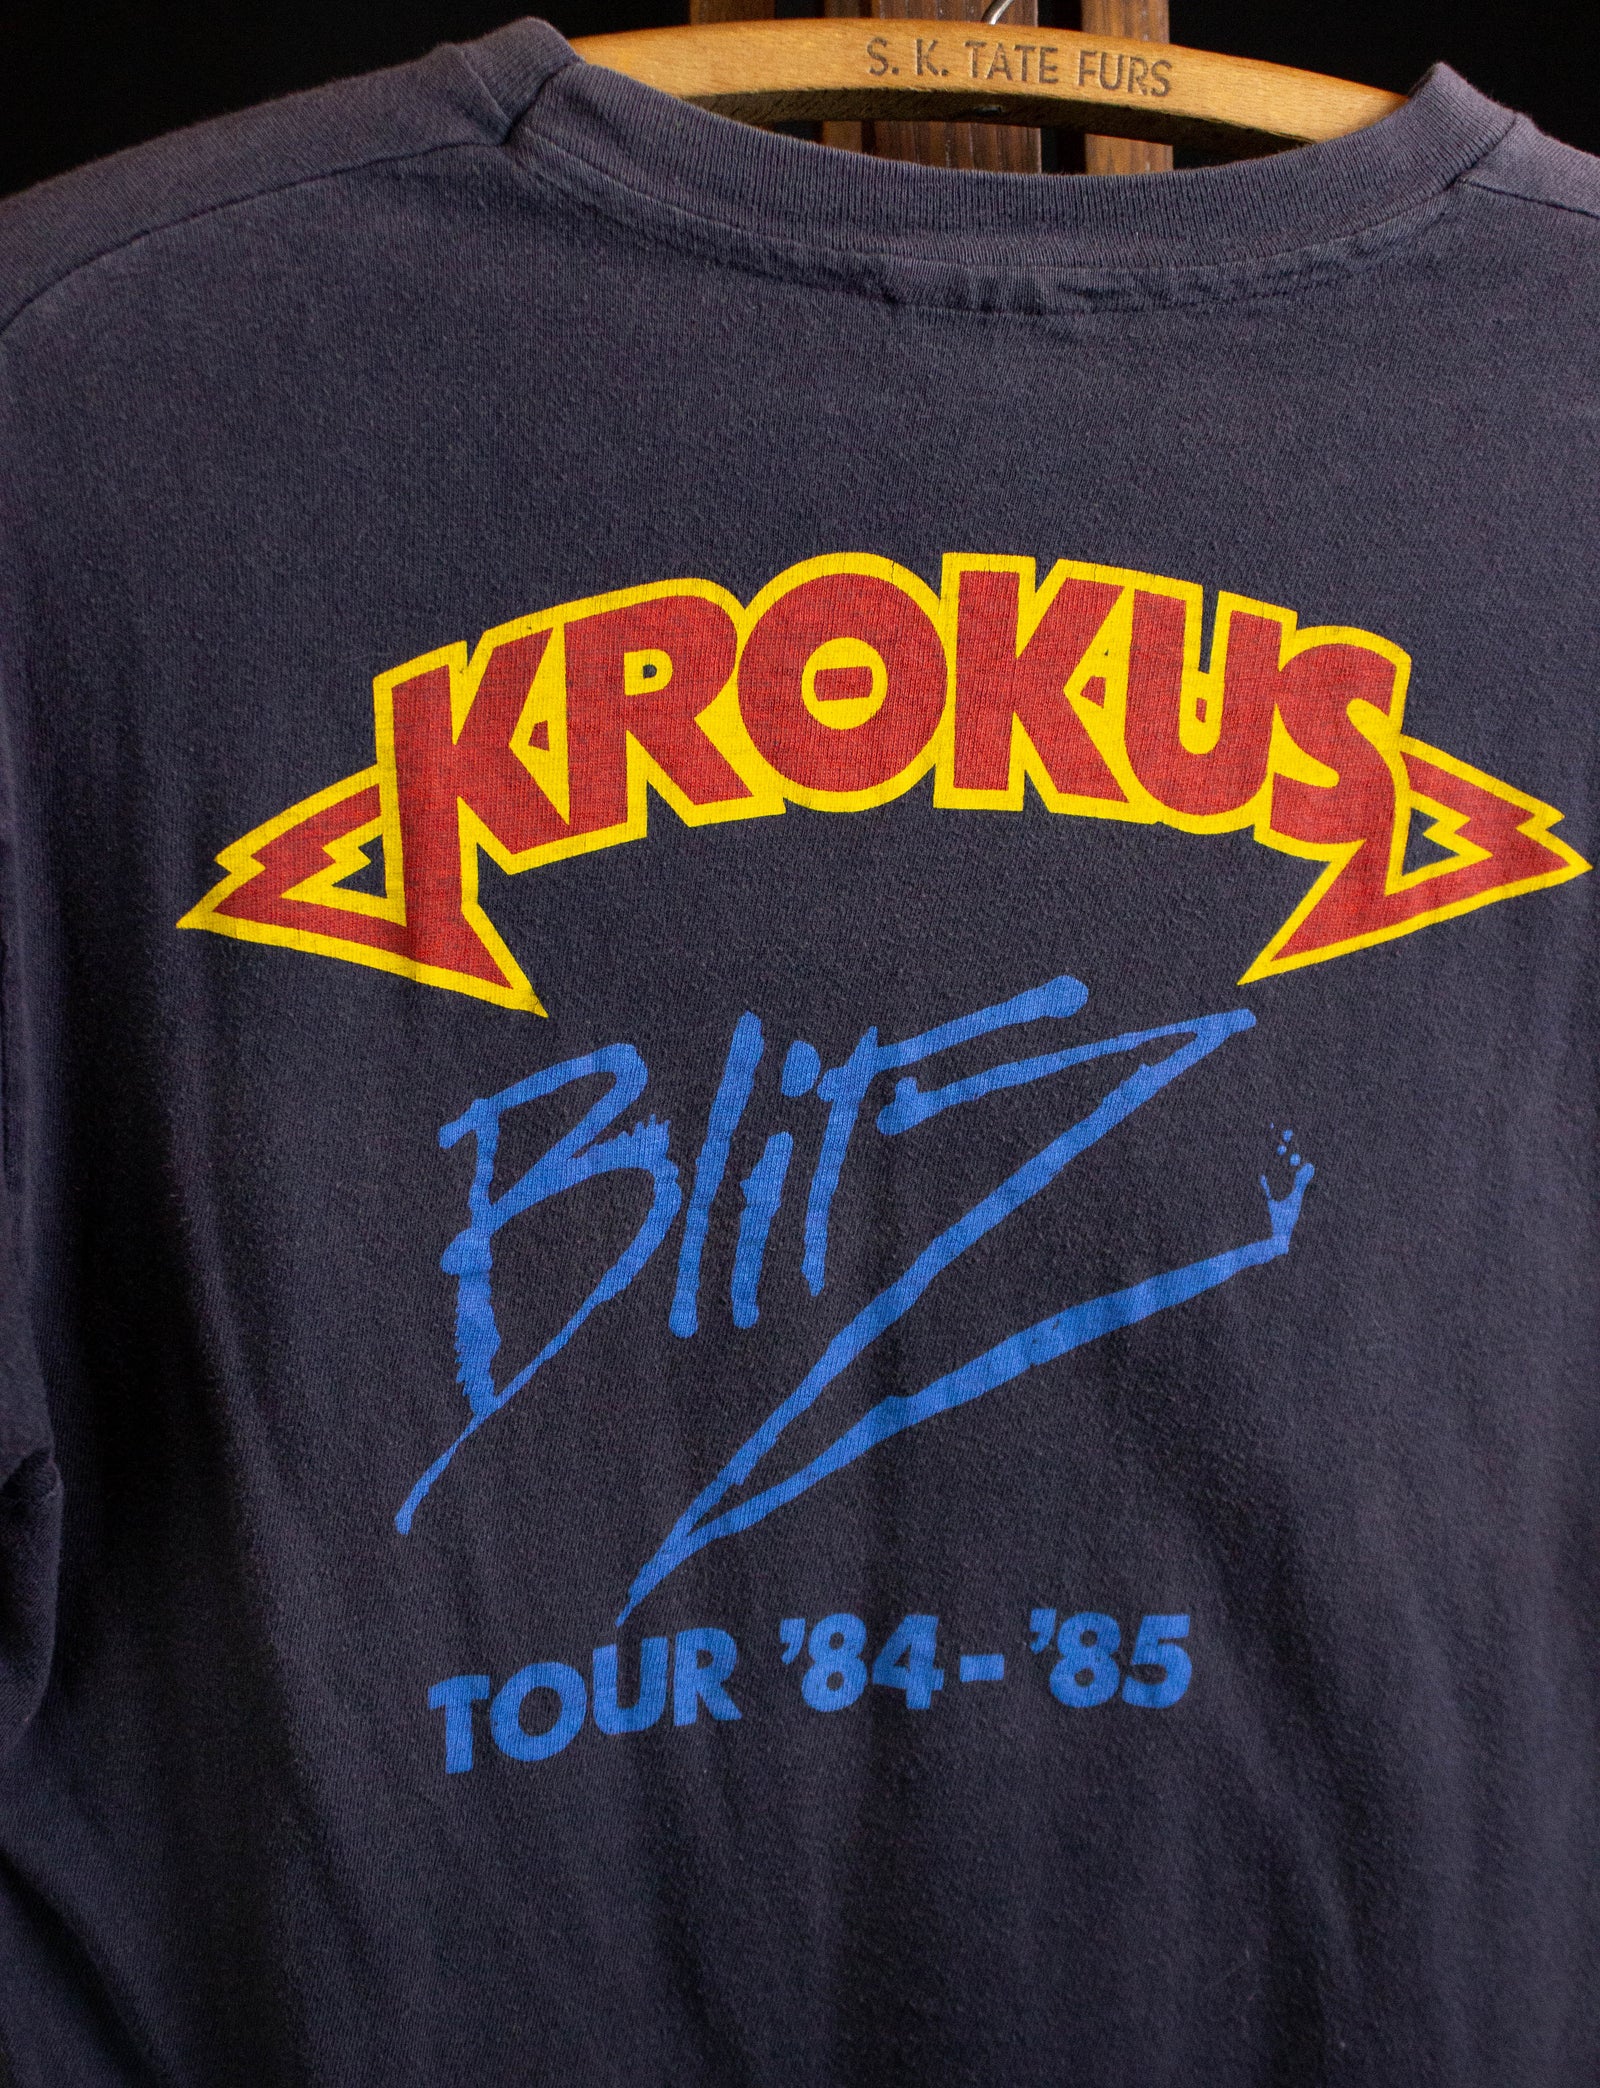 Vintage 1984/1985 Krokus "Midnite Maniac" Blitz Tour Concert T Shirt Small